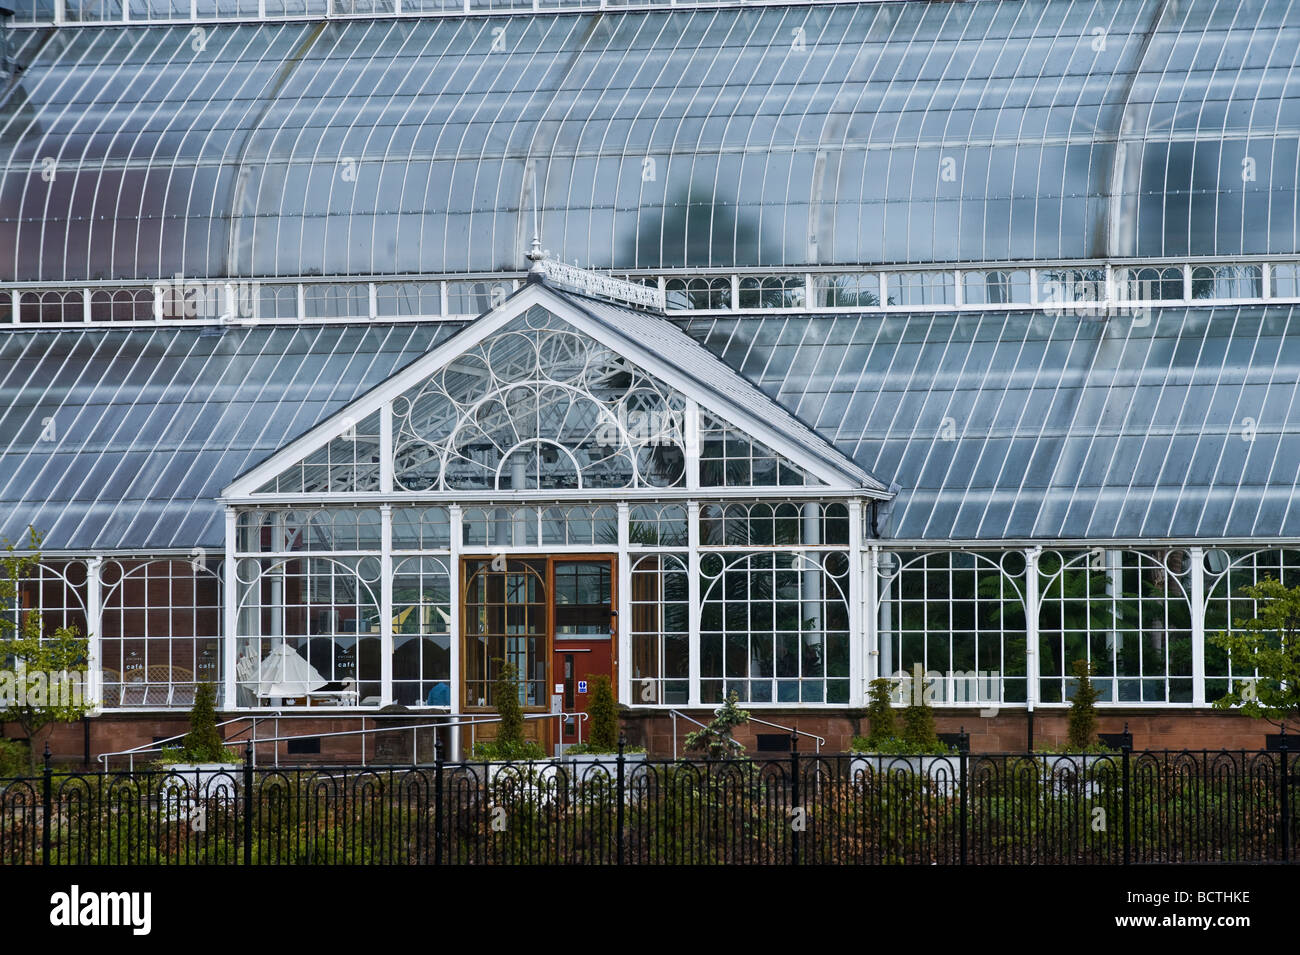 People´s Palace and Winter gardensGlasgow, Scotland, United Kingdom, Europe Stock Photo